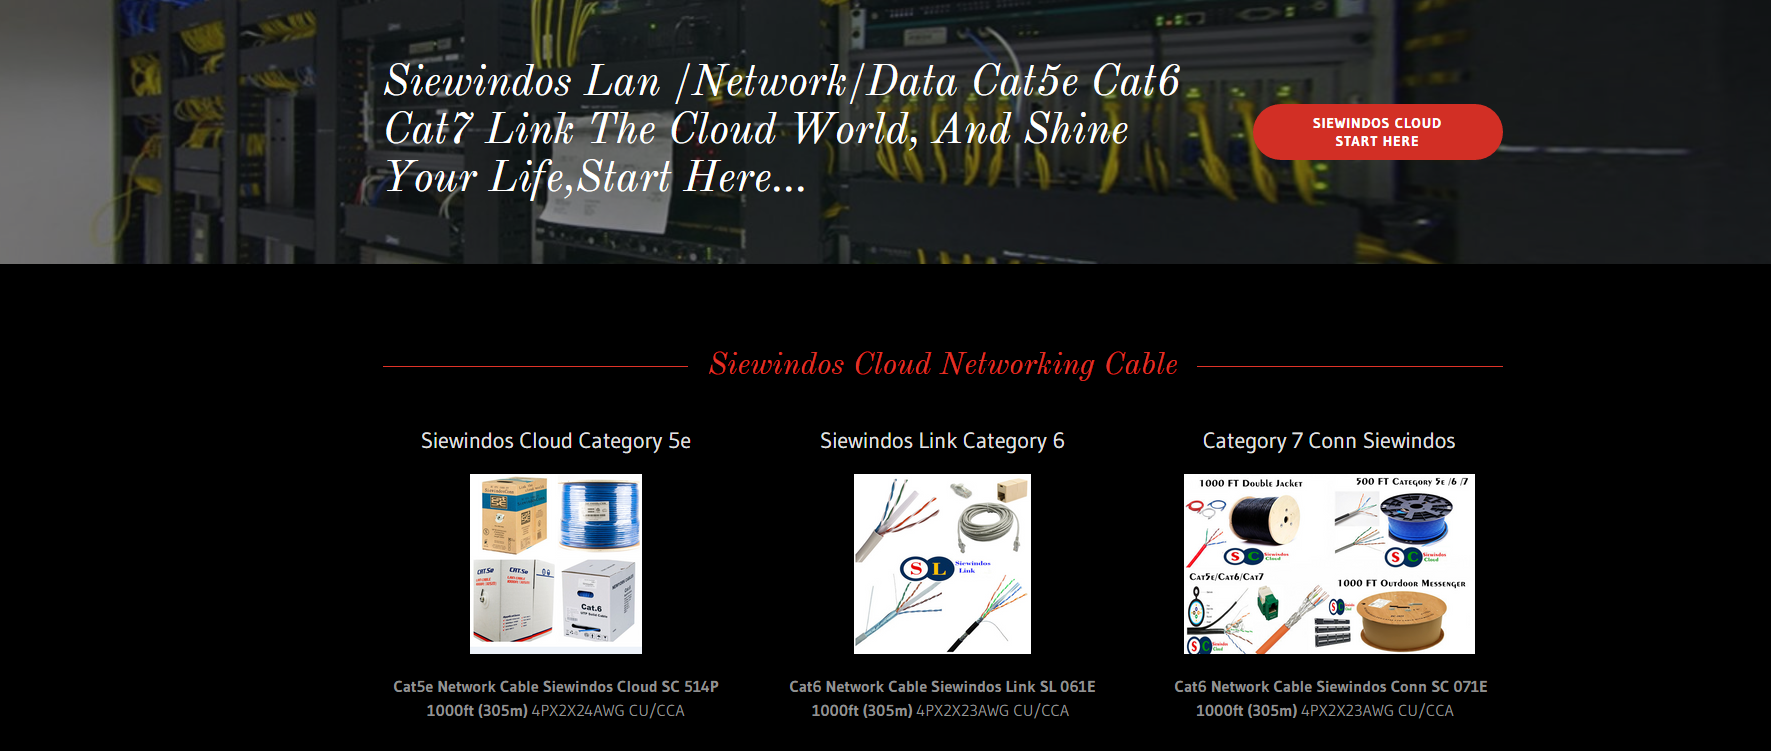 Siewindos Communication Cable Ltd Main Image